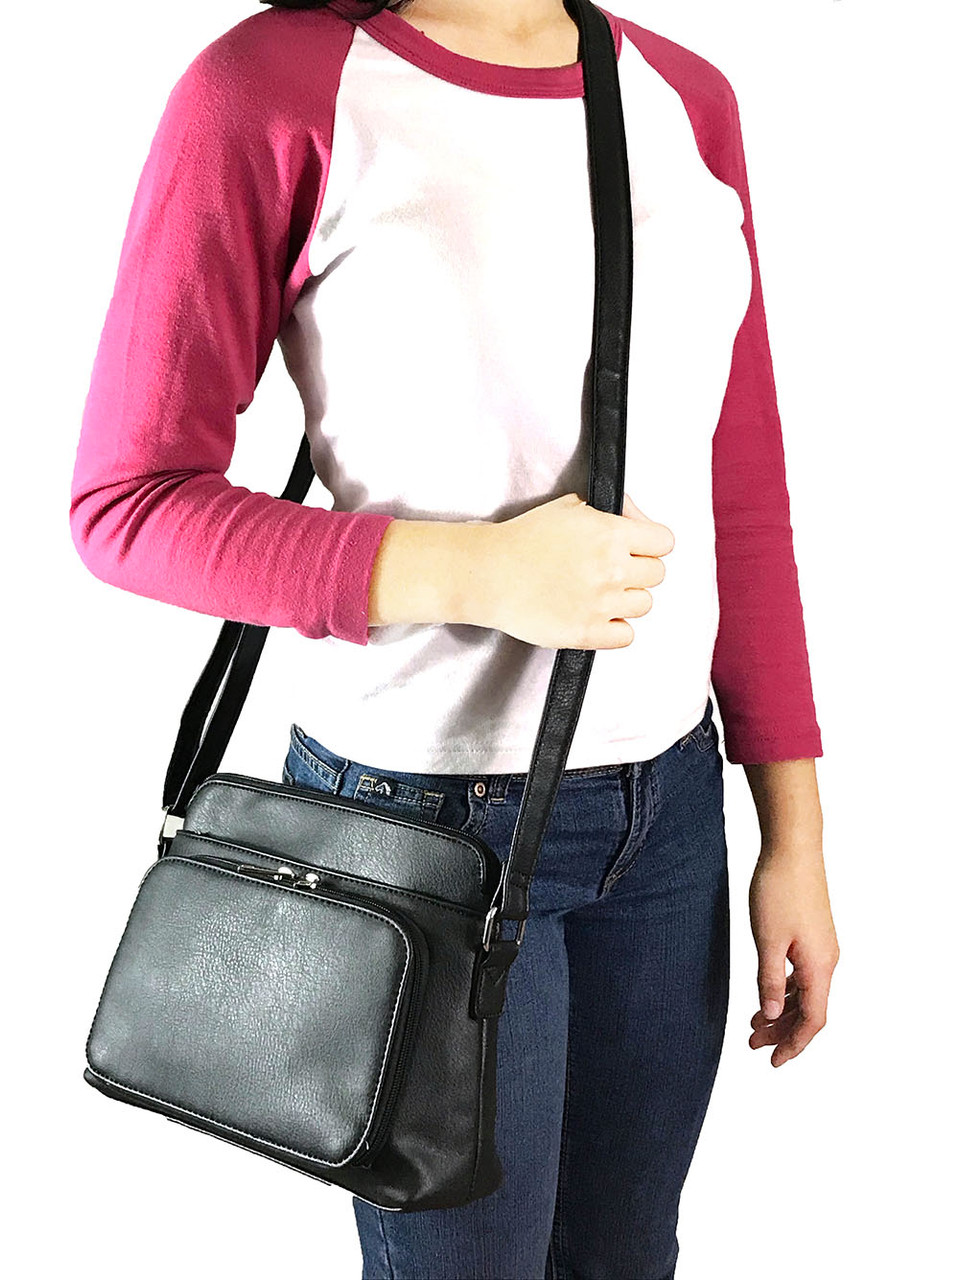 Improving Lifestyles Leather Multi-Pocket Crossbody Purse Bag Black  RLILRM004BK | eBay